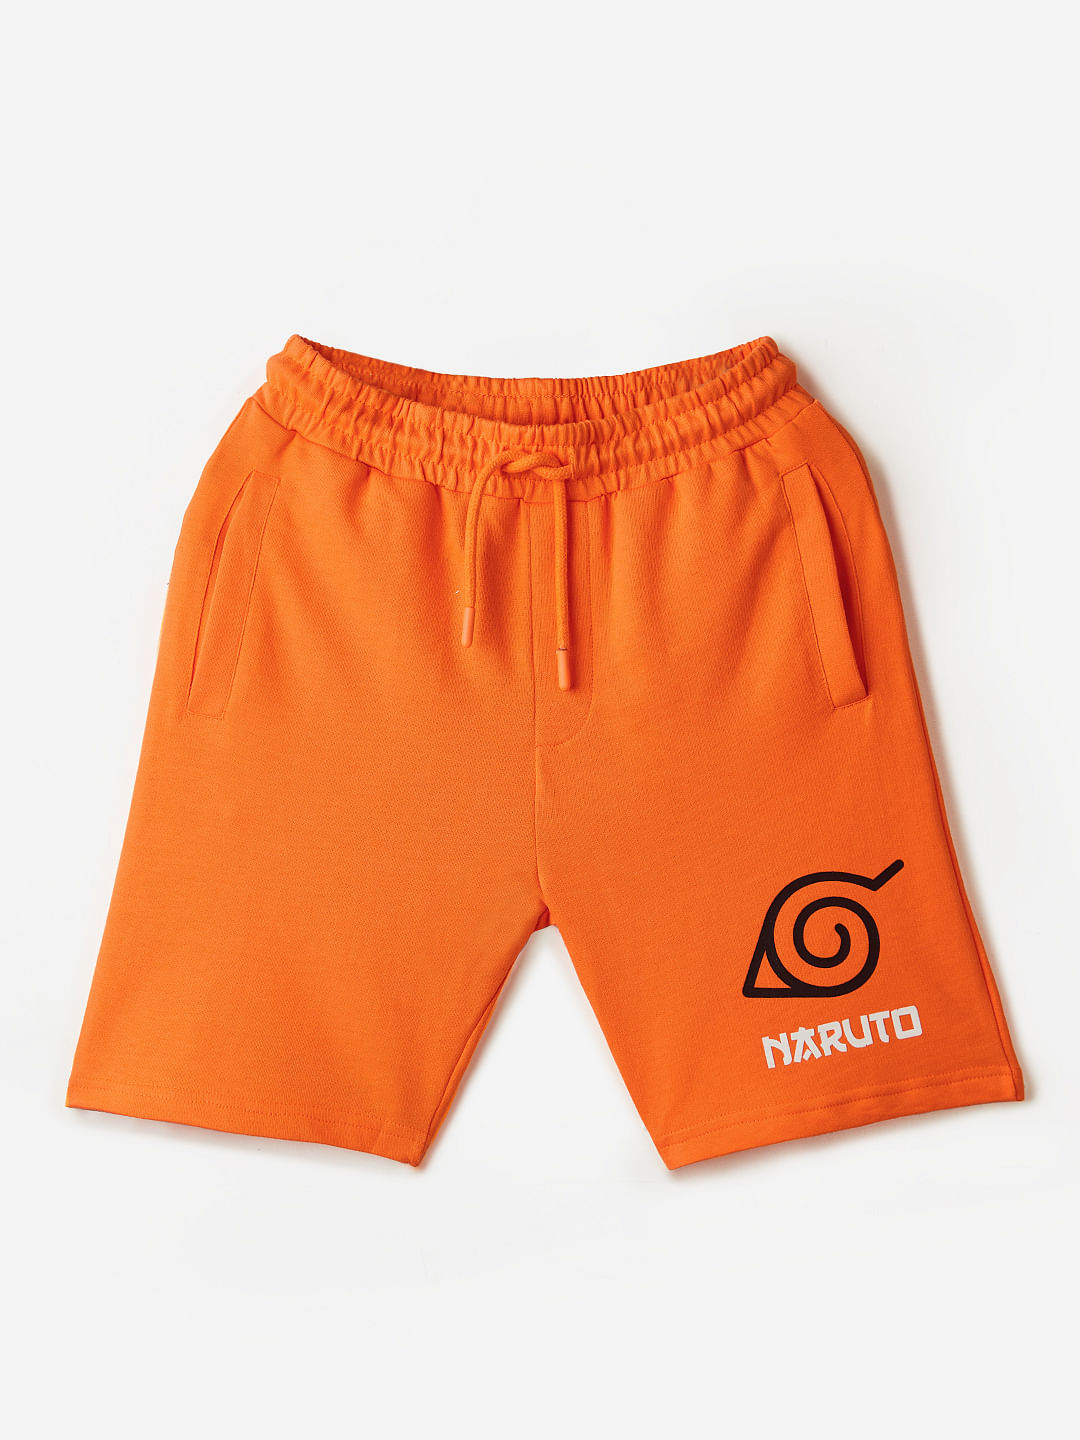 Naruto: Believe It Boys Cotton Shorts